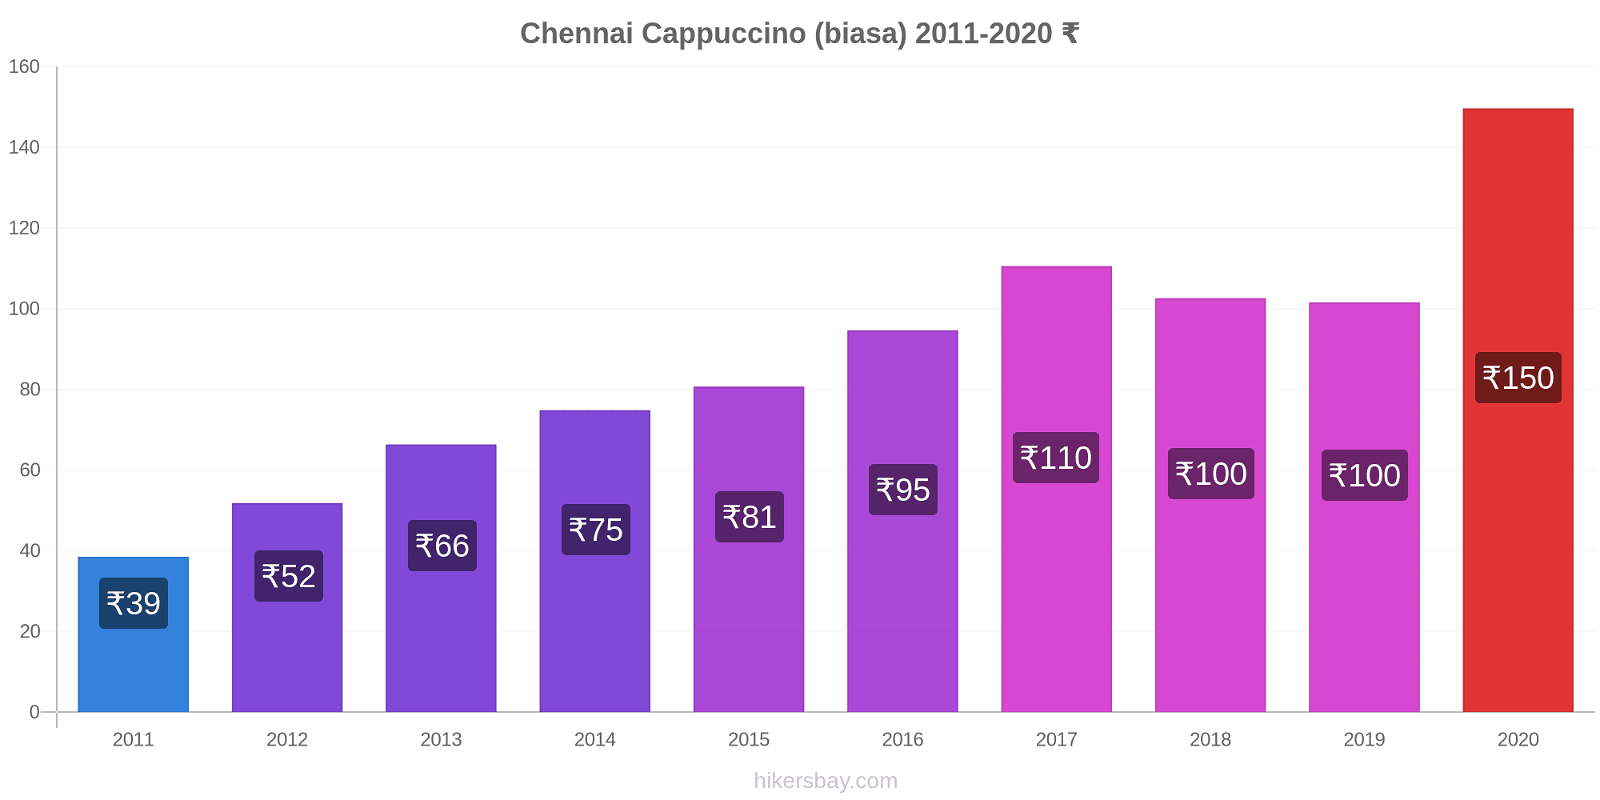 Chennai perubahan harga Cappuccino (biasa) hikersbay.com